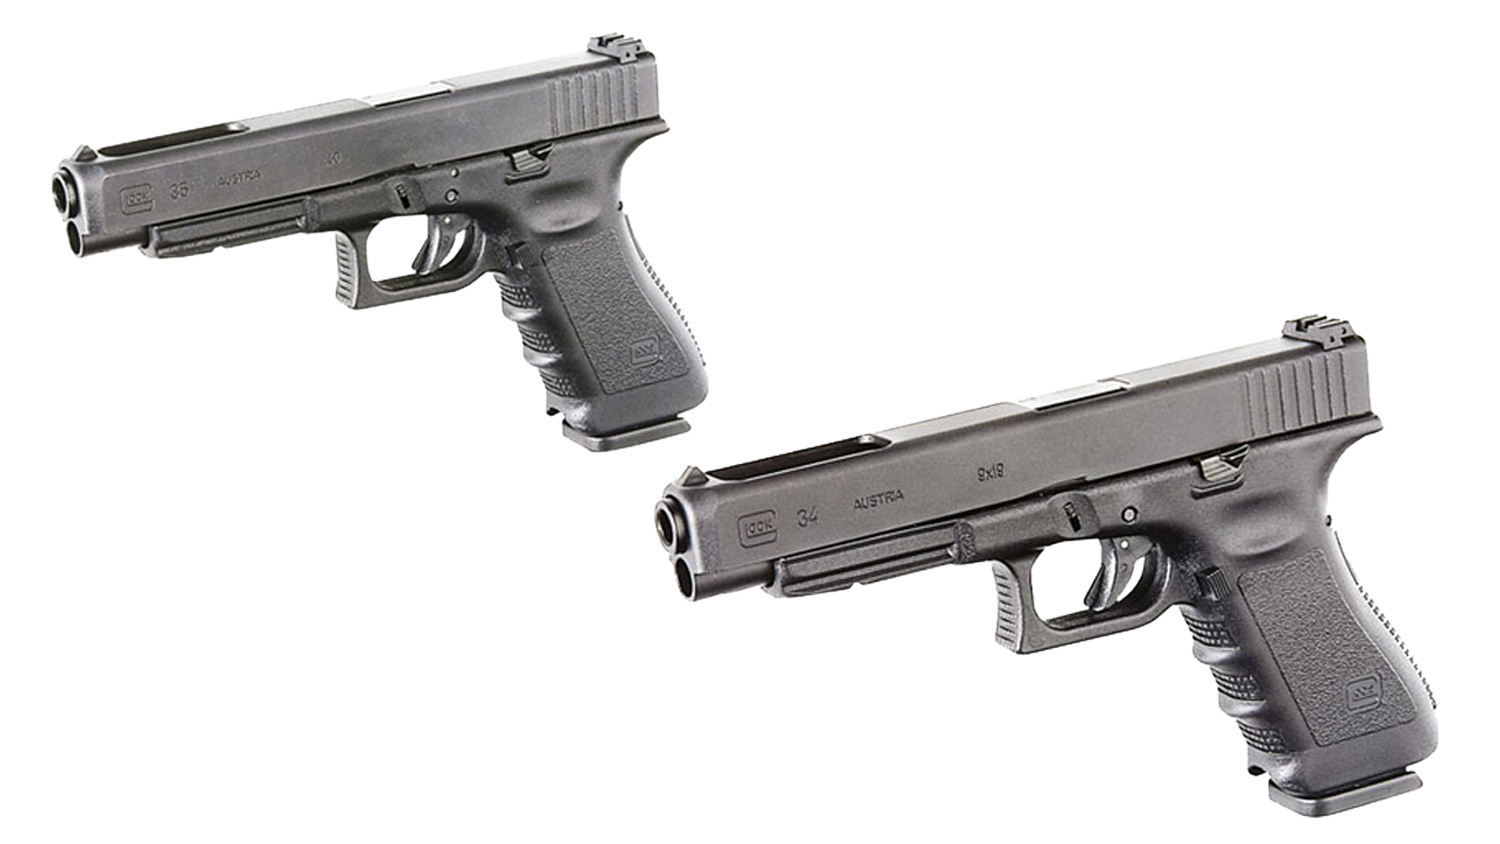 GLOCK G34 and G35 pistols